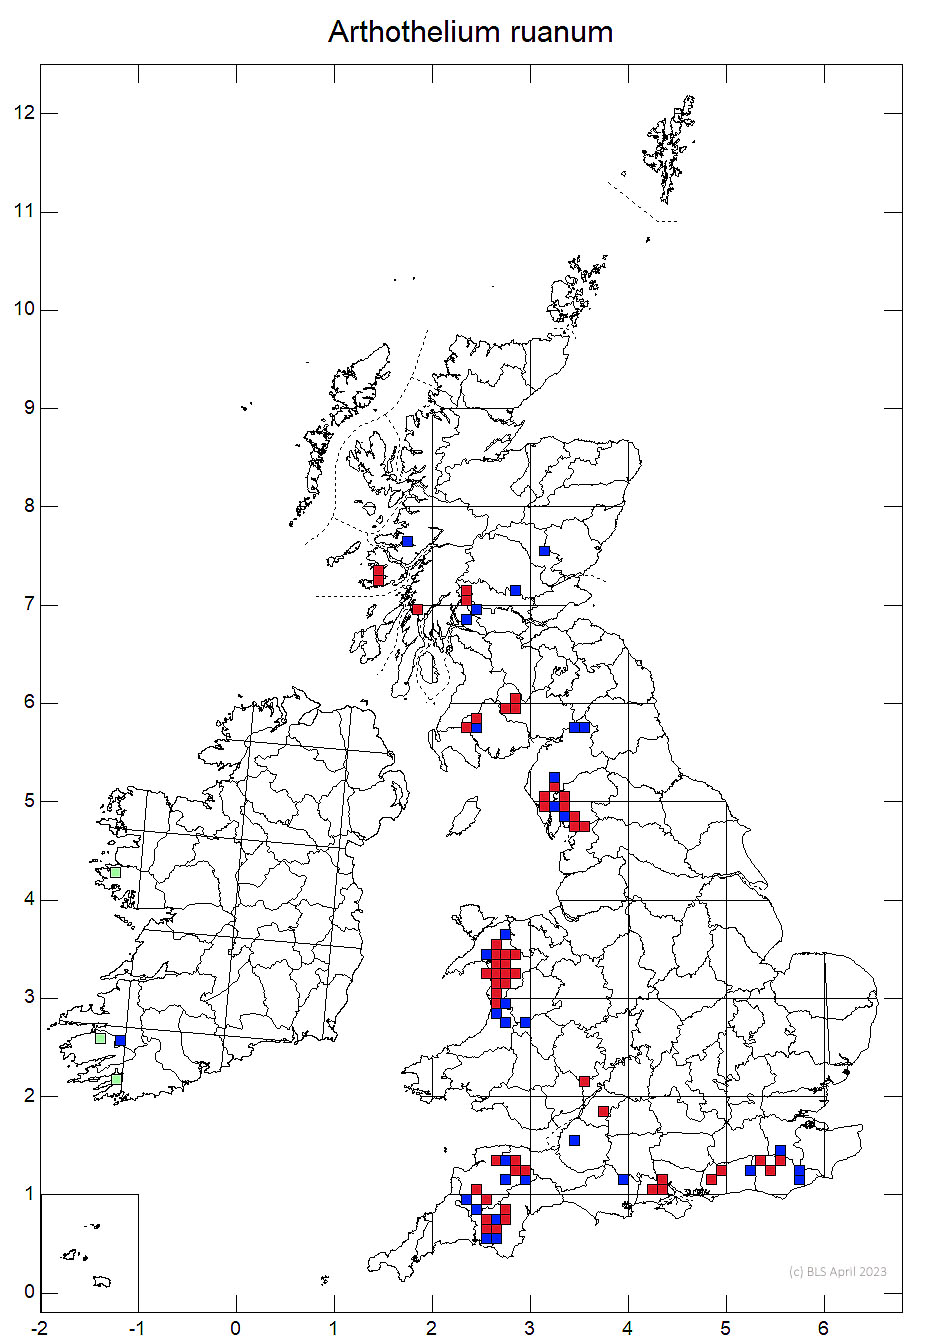 Arthothelium ruanum 10km sq distribution map